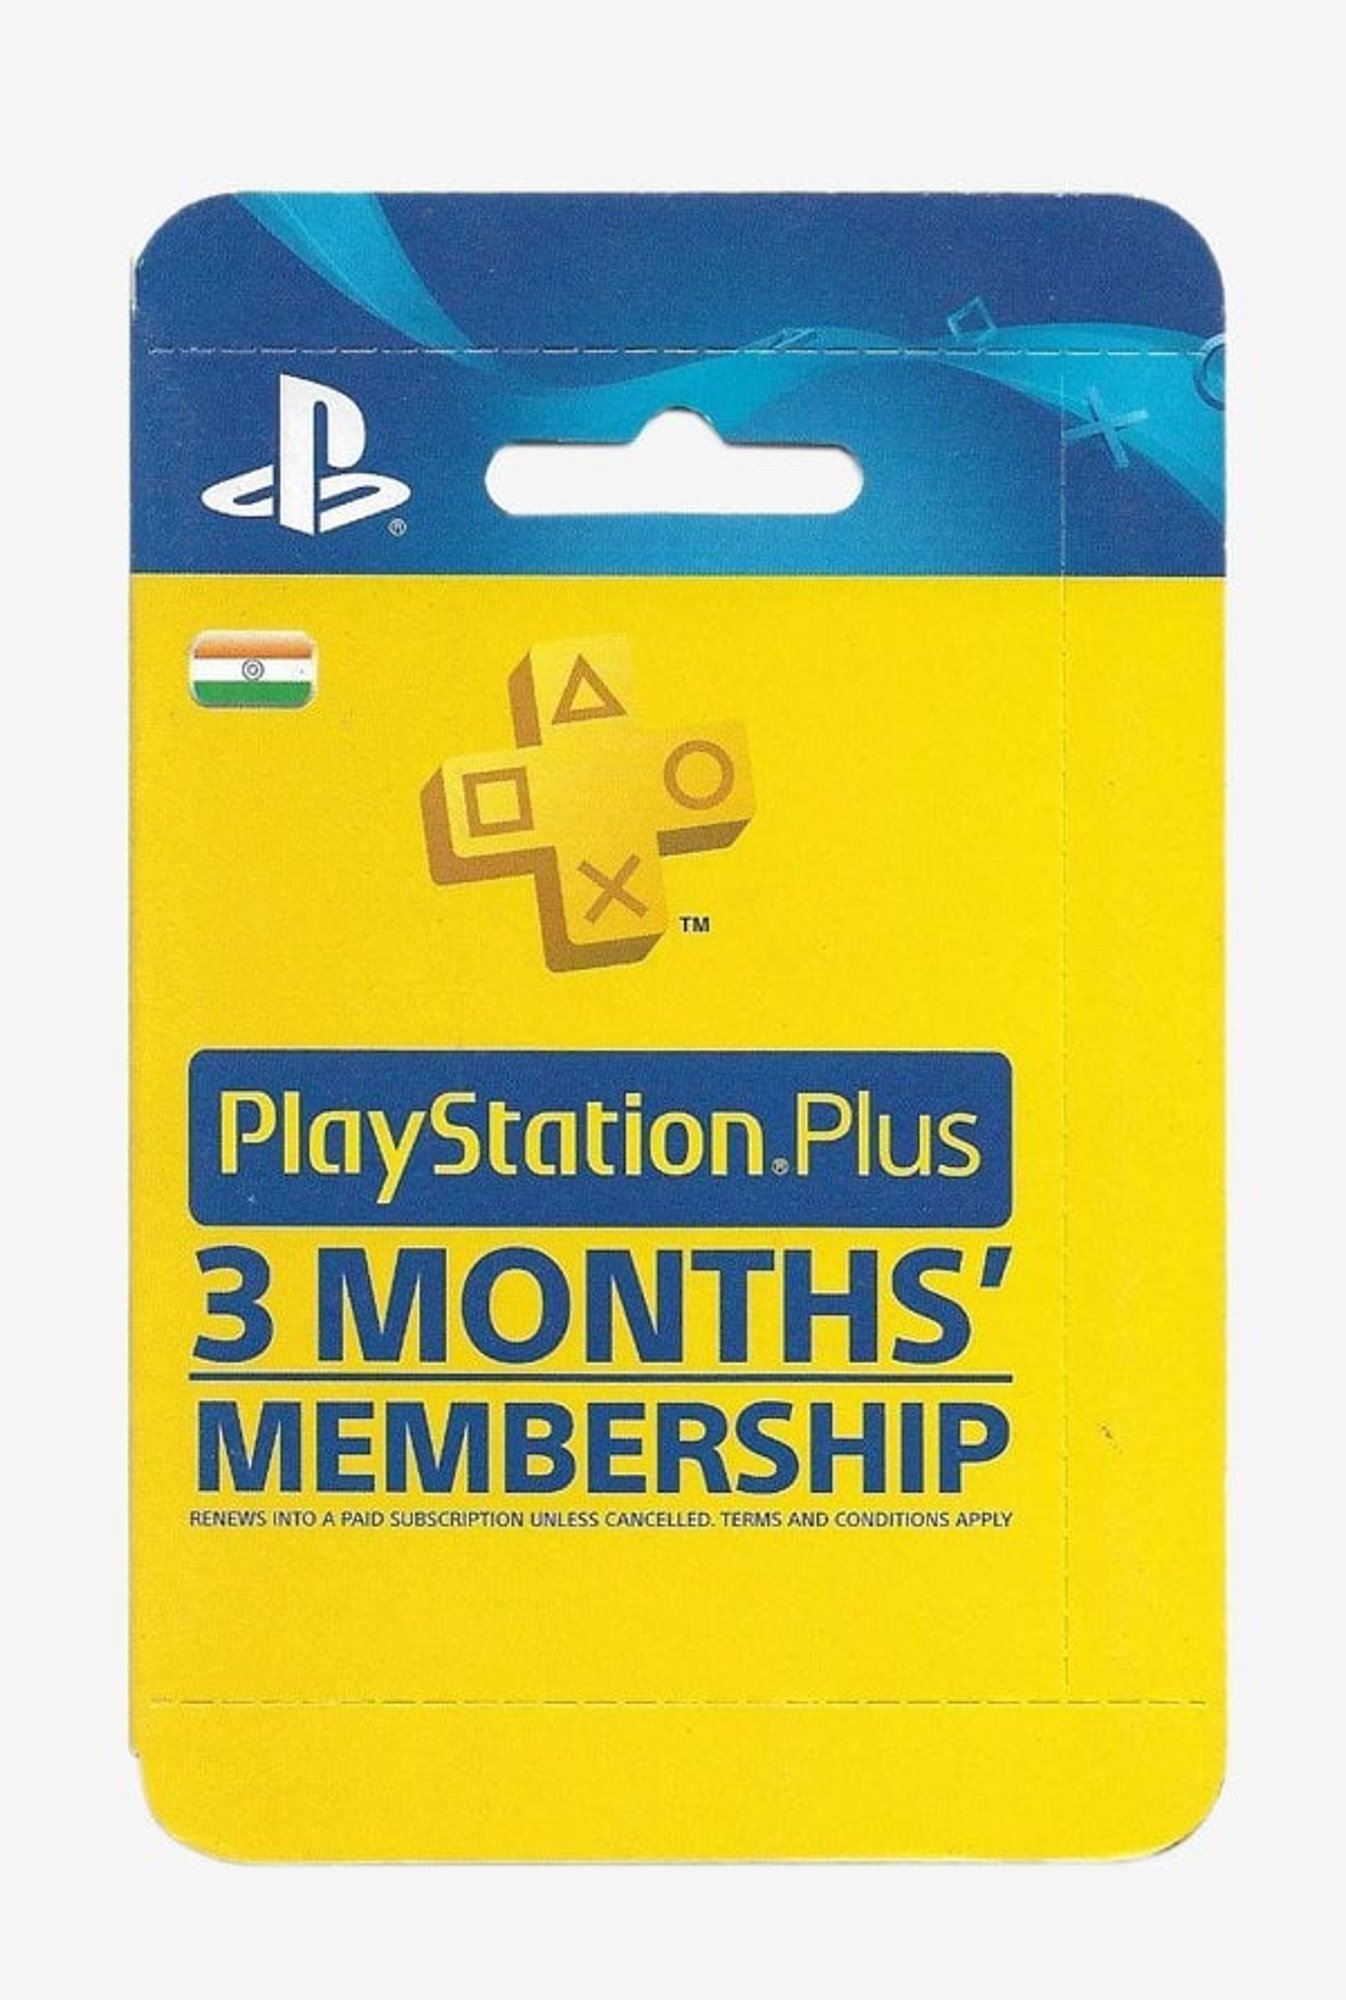 playstation plus membership card